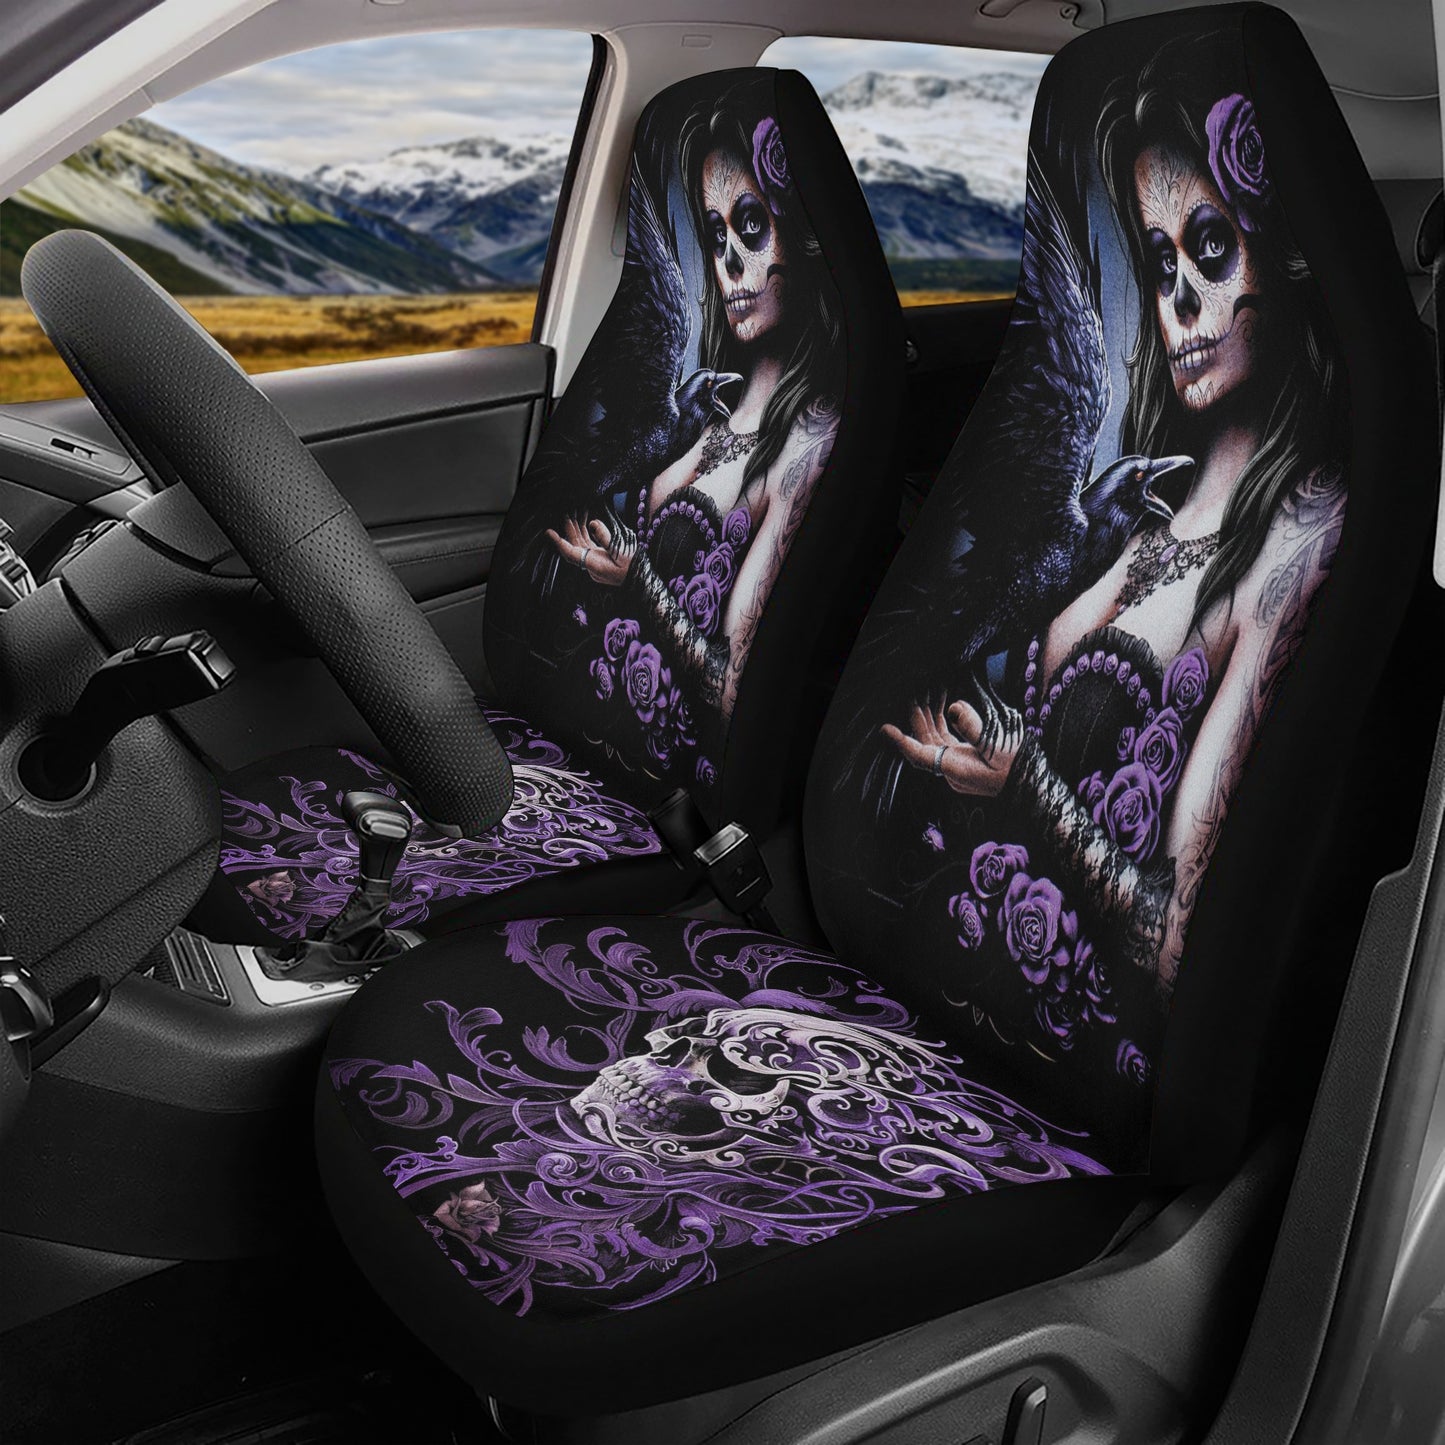 Cinco de mayo skull seat cover for vehicles, calaveras skull car floor mat, candy skull car seat cushion cover, calaveras skull rug mat for